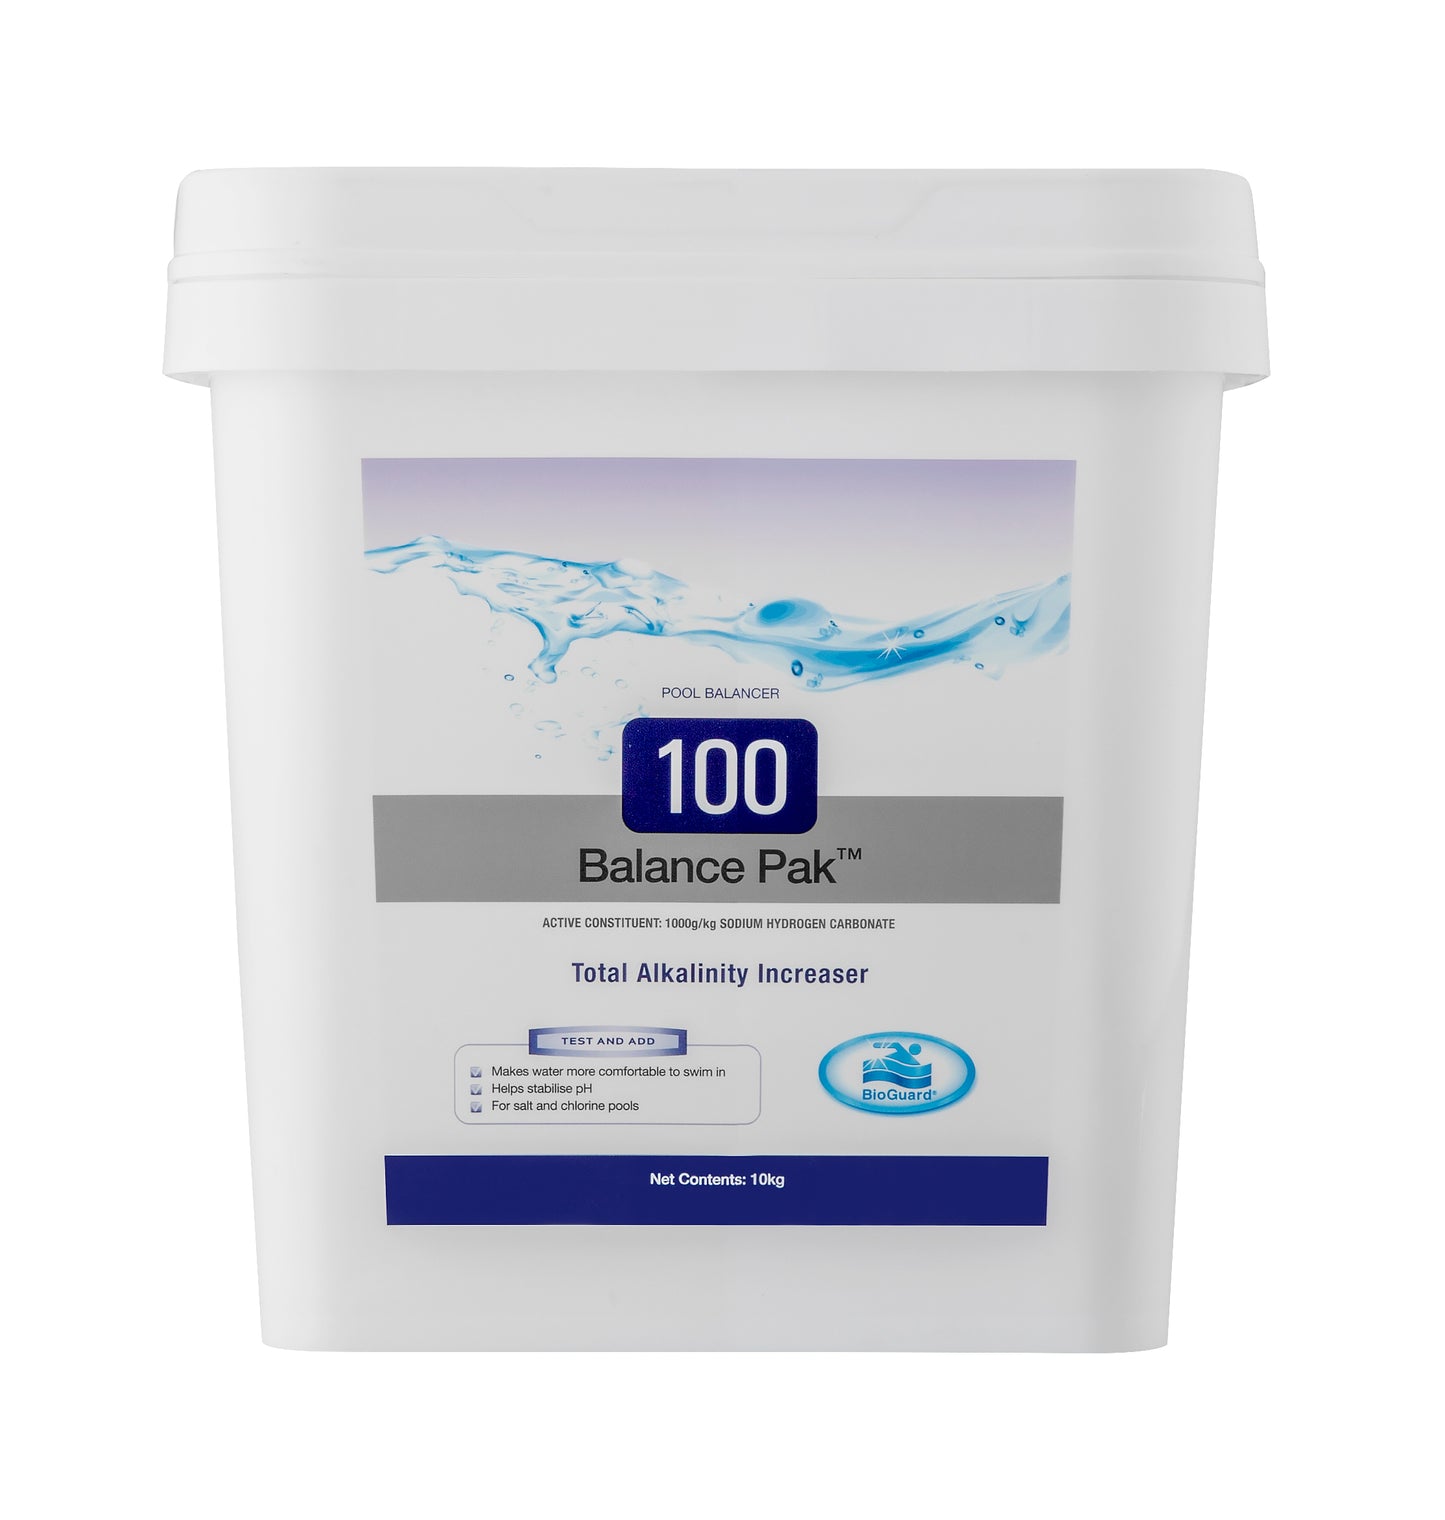 Bioguard Balance Pak 100 10kg Alkalinity Increaser